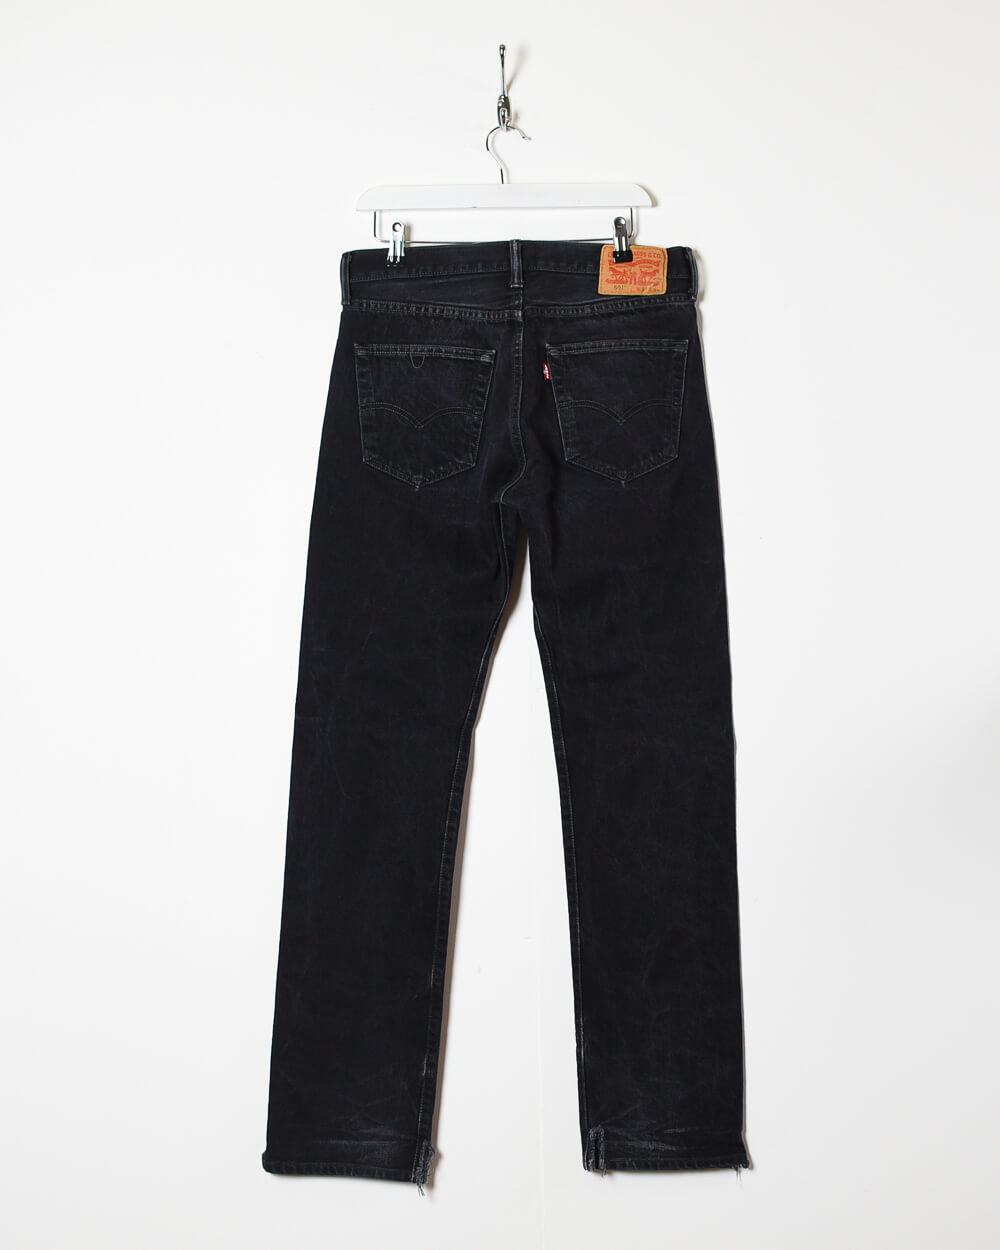 Levi's 501 Jeans - W32 L34